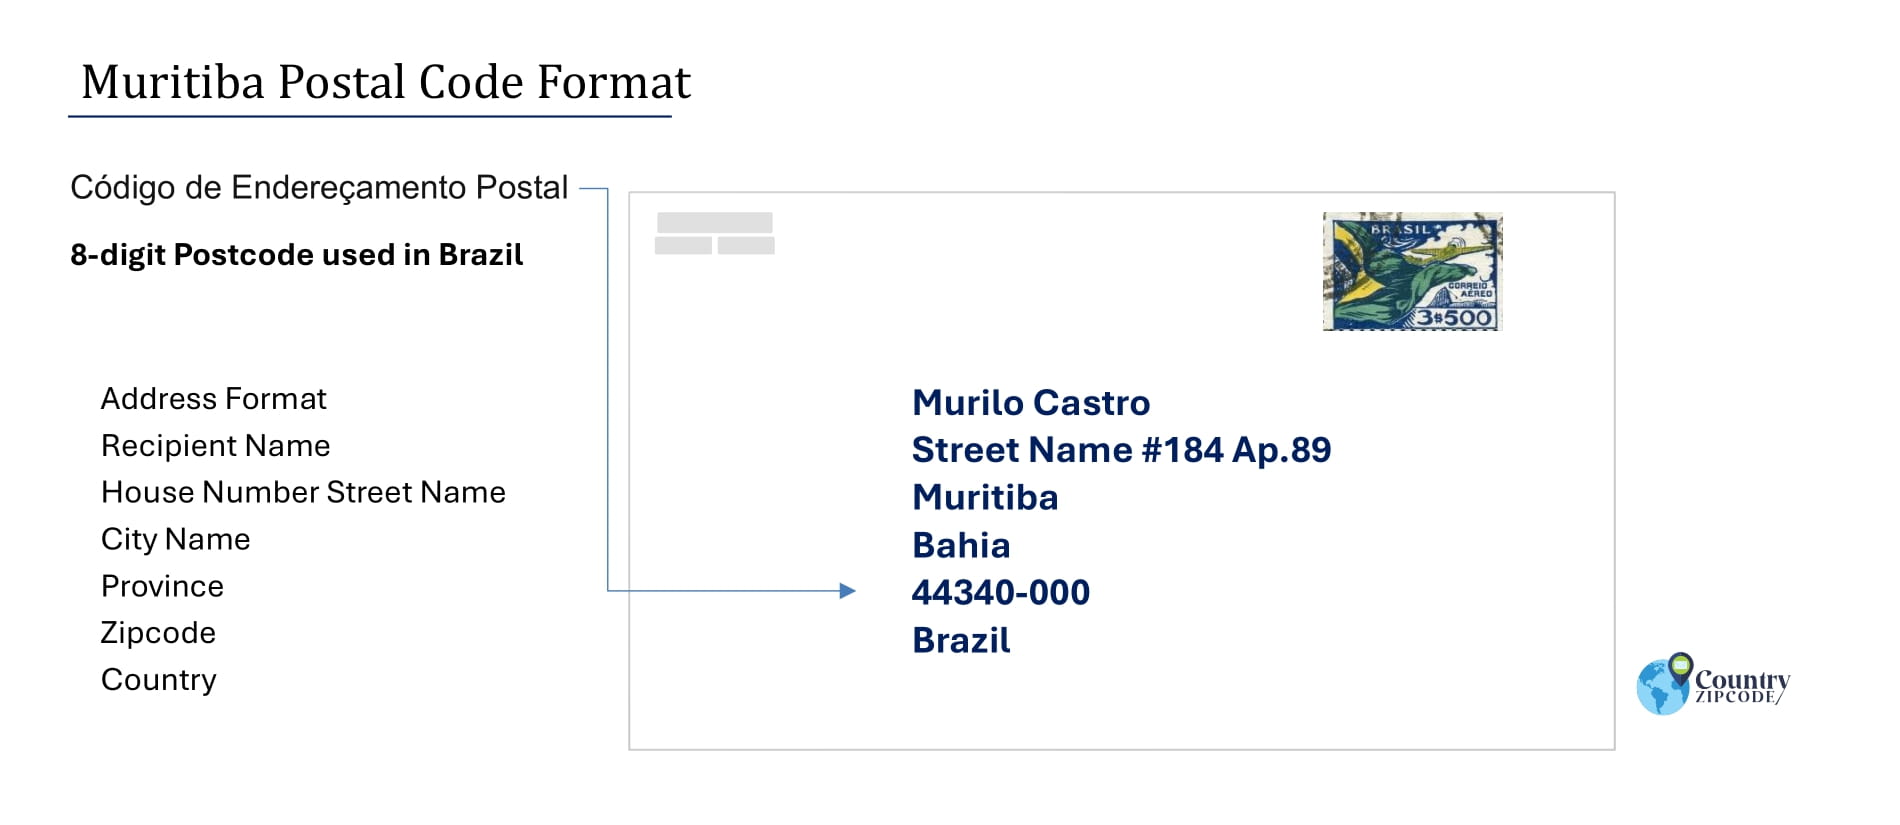 Example of Codigo de Enderecamento Postal and Address format of Muritiba Brazil